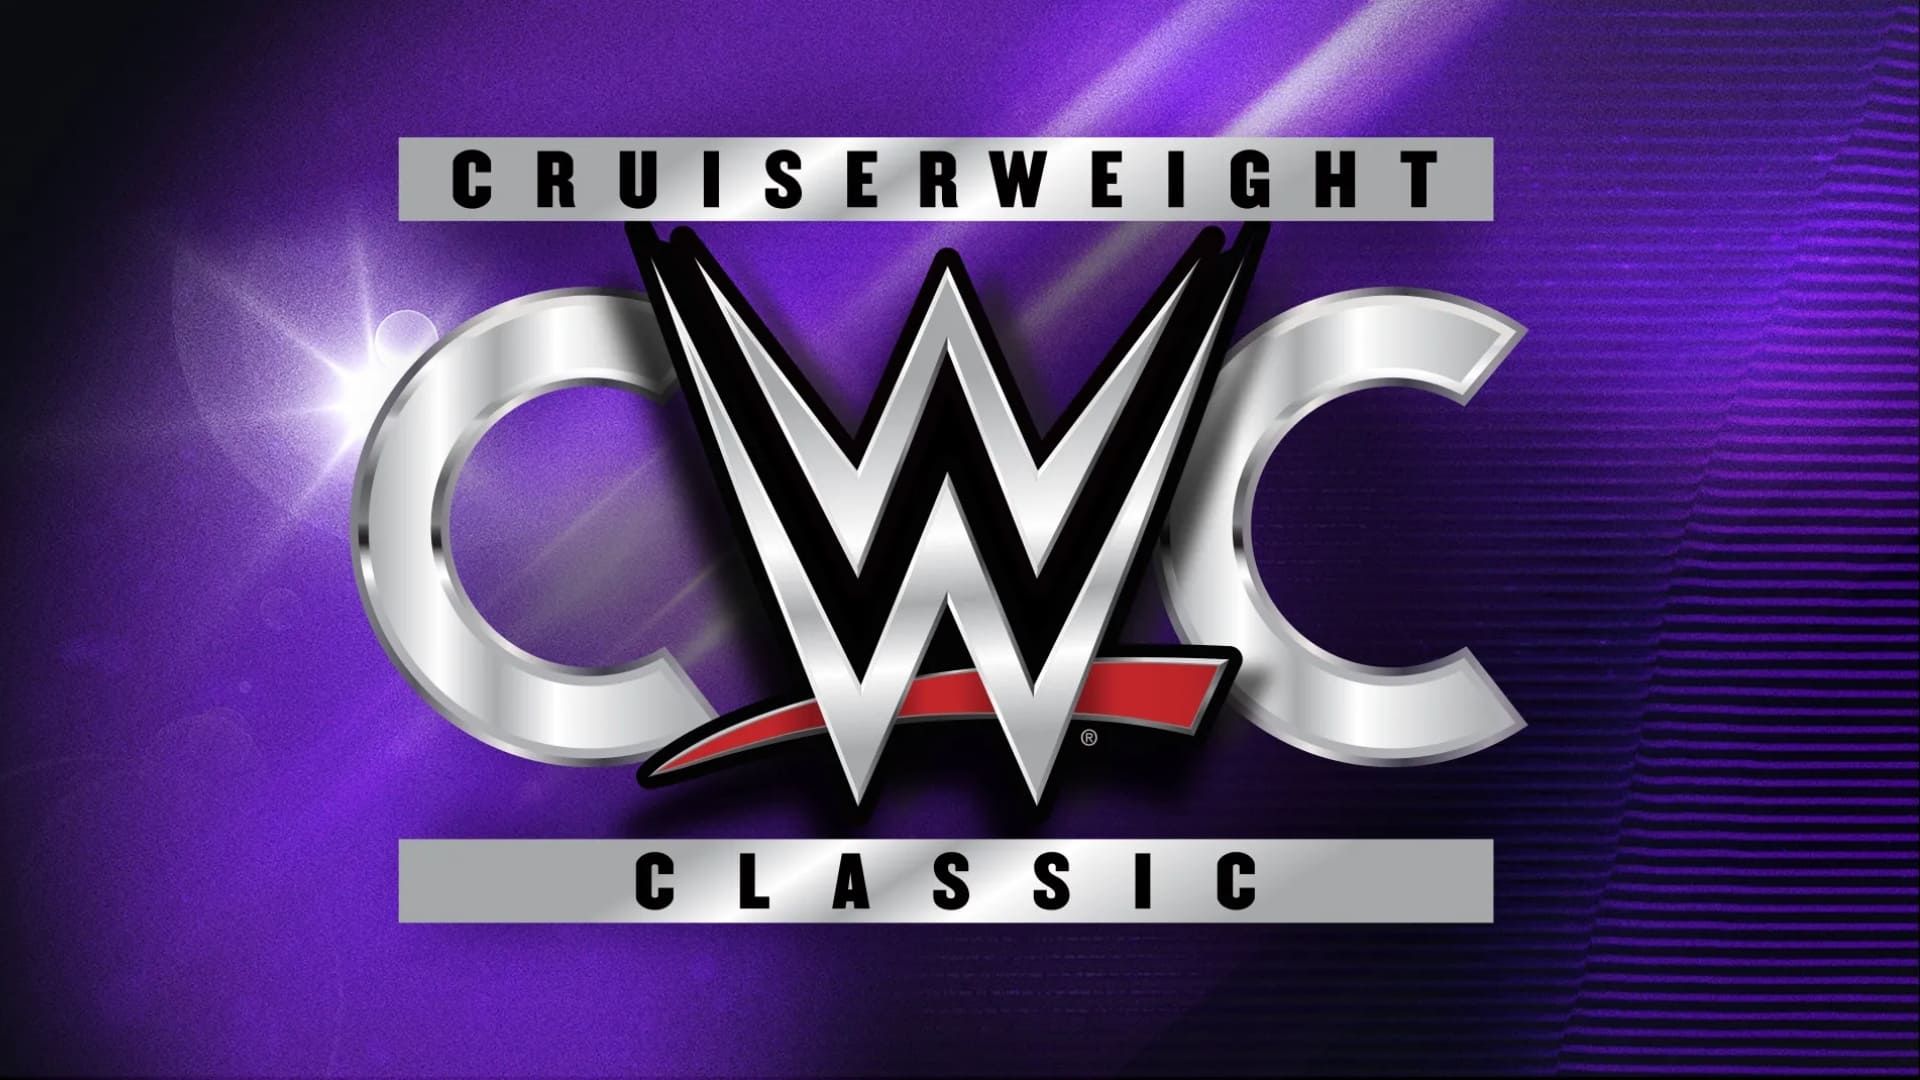 Cruiserweight Classic: CWC background